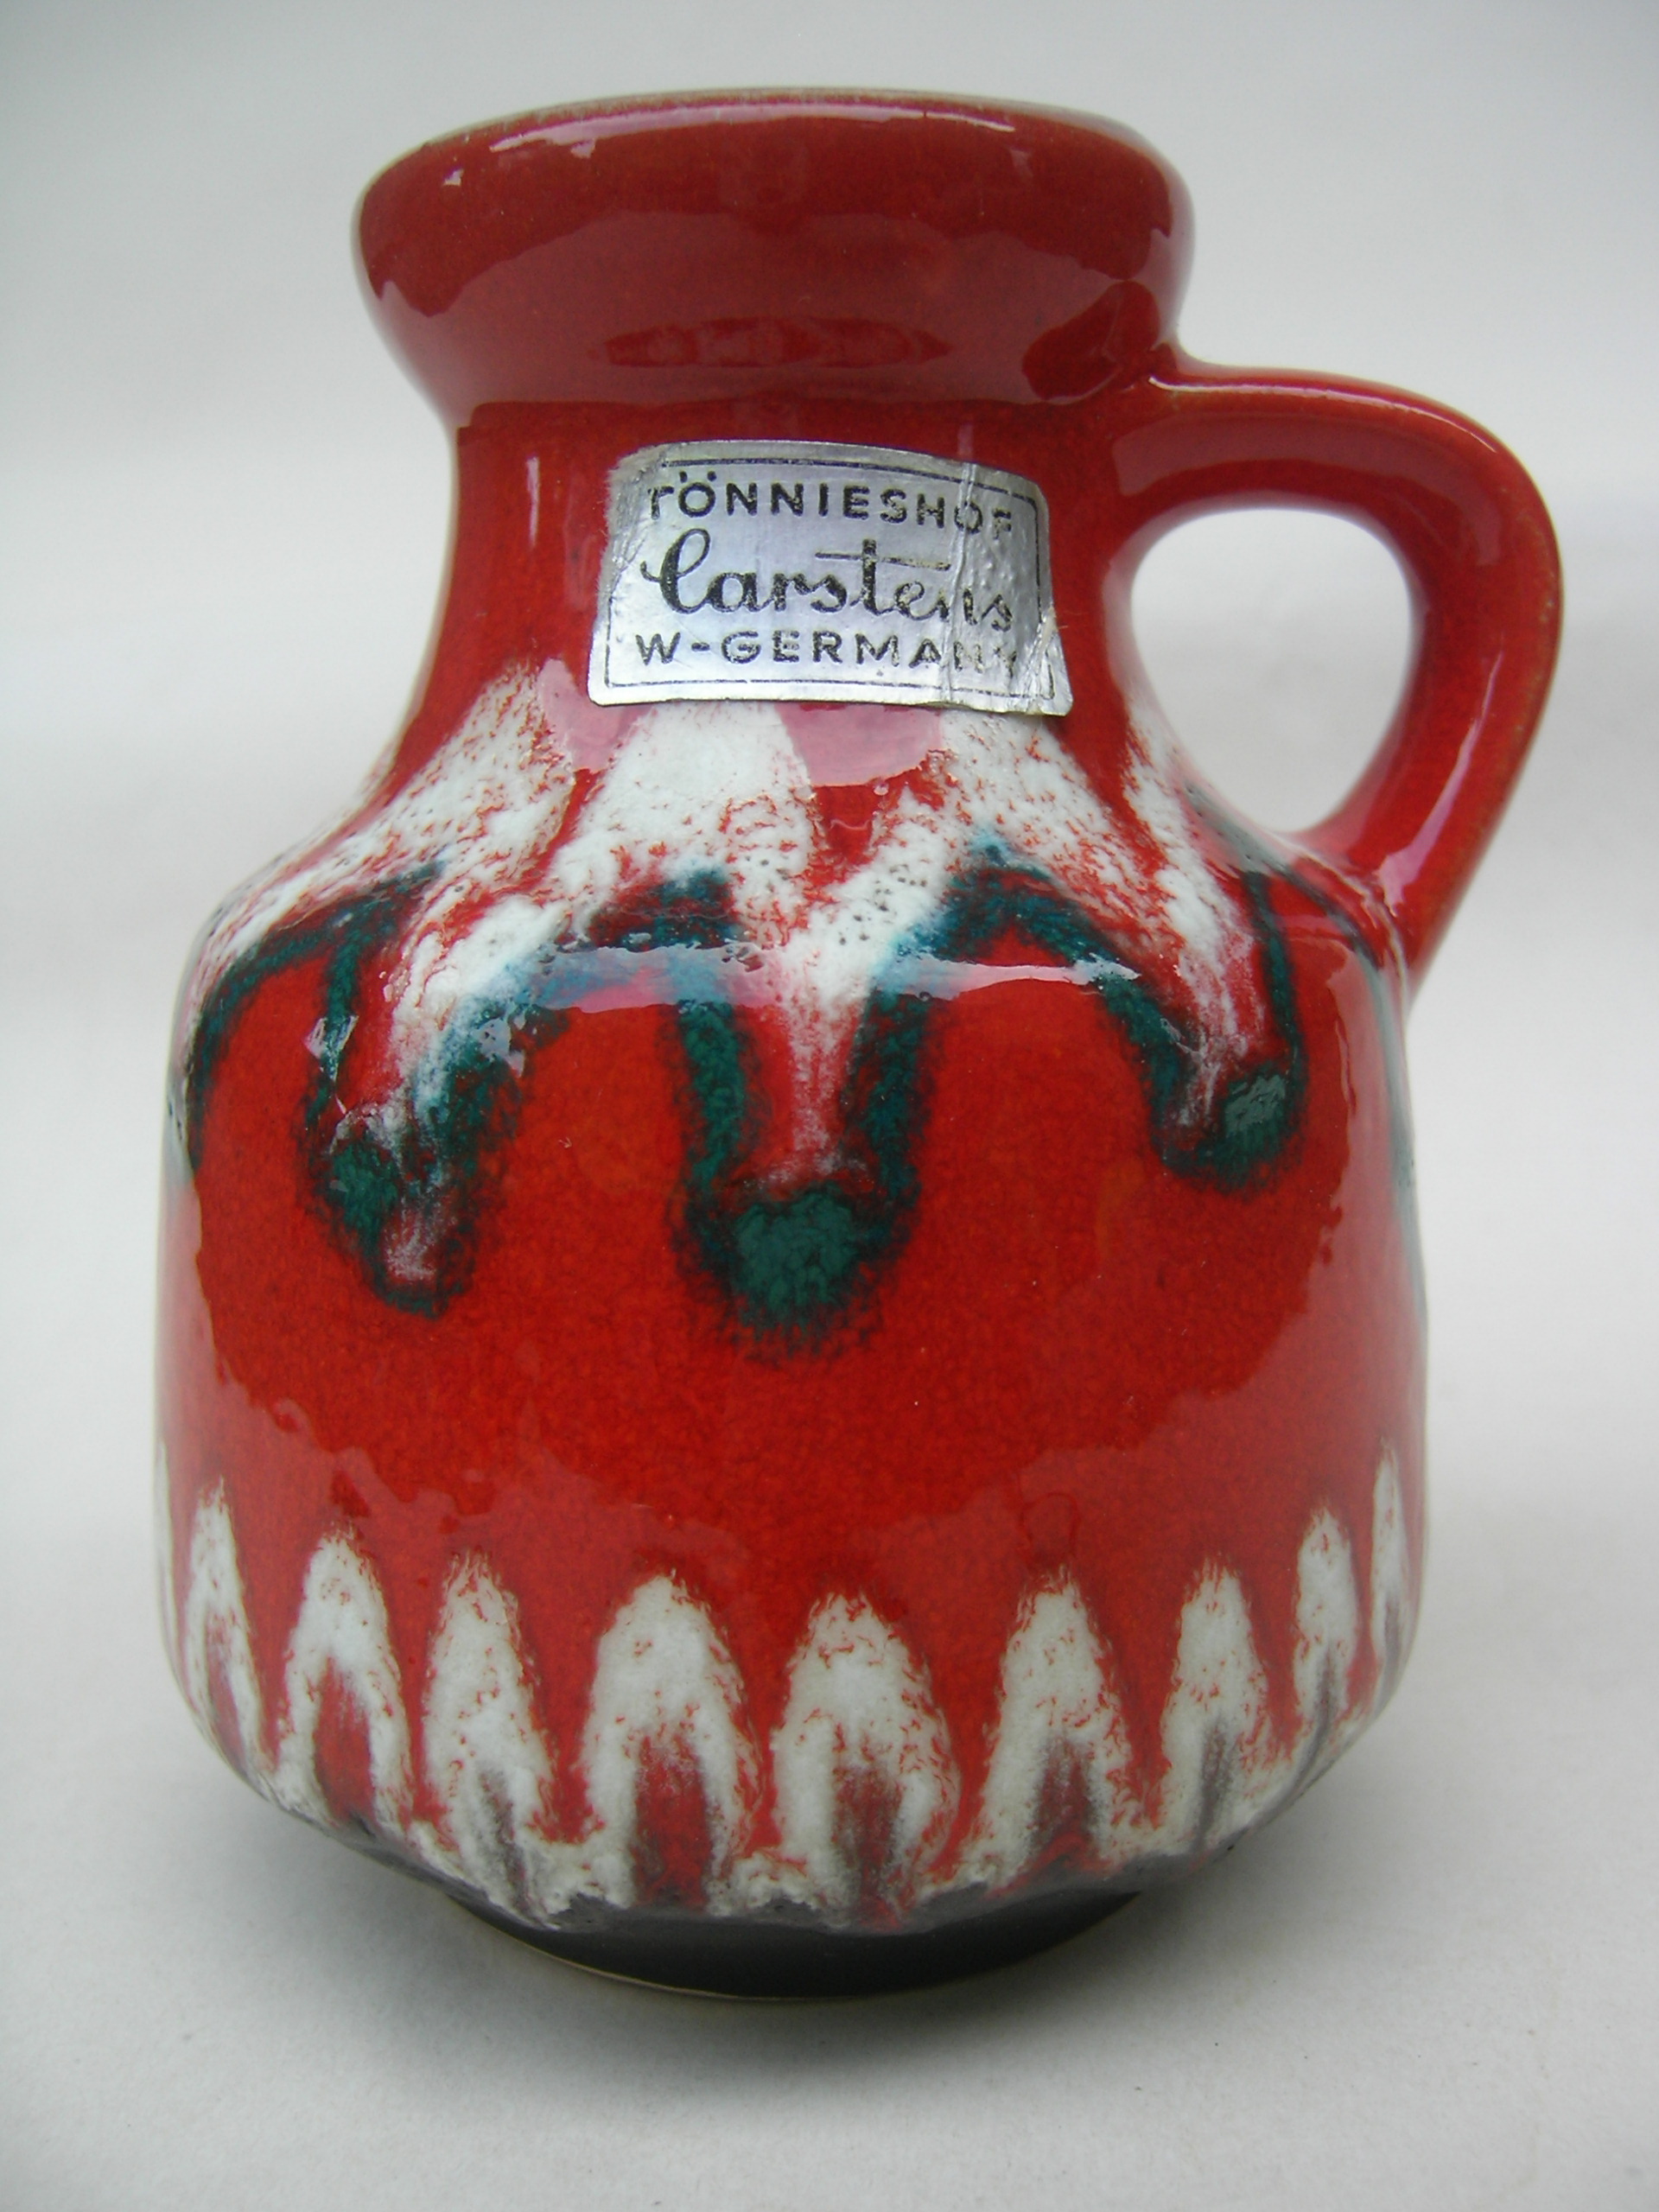 Carstens 6004-10 Red West German Ceramic Vase